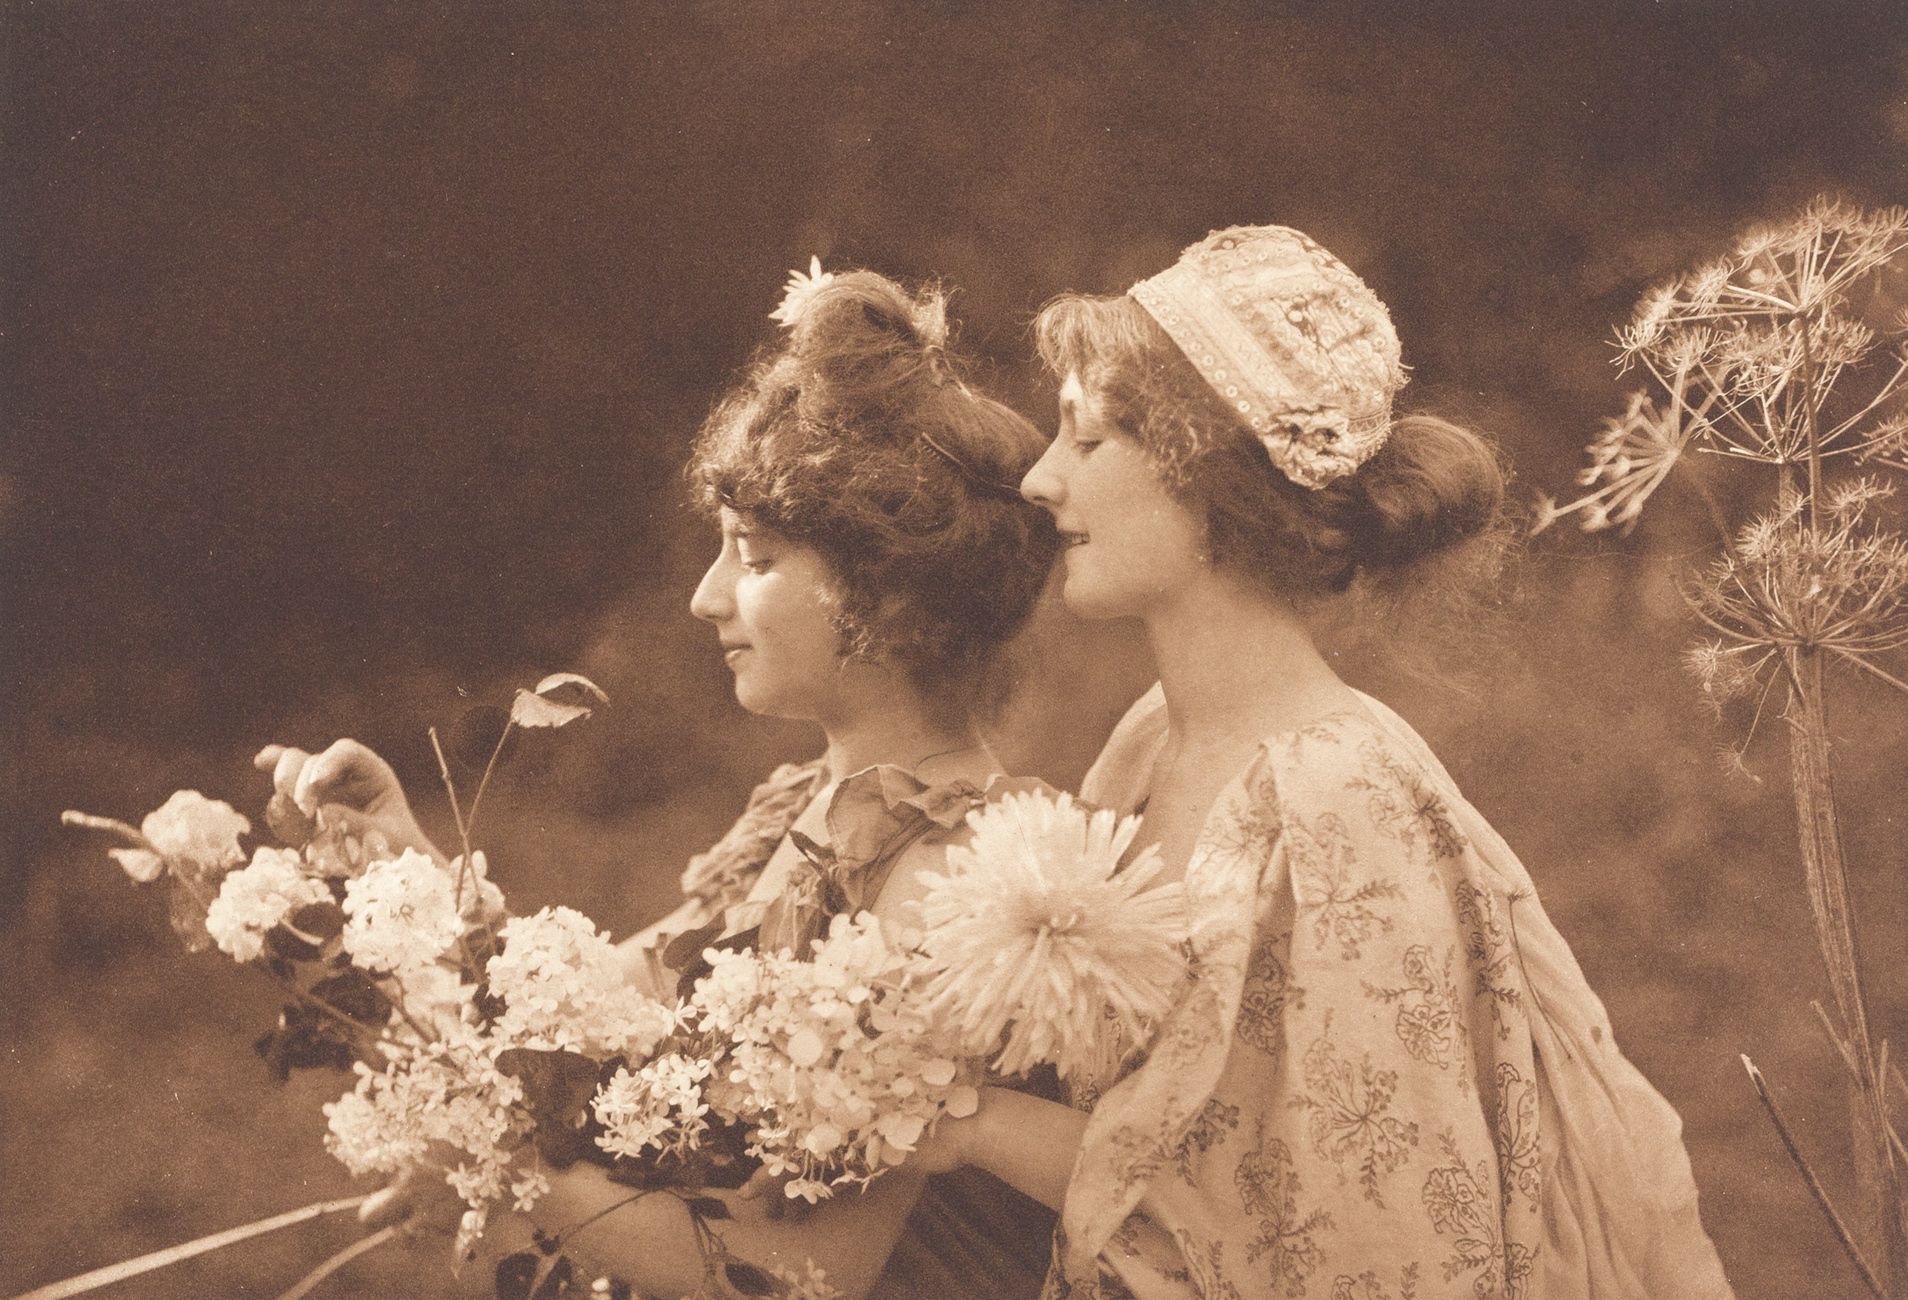 CONSTANT PUYO (1857–1933) 
常溥仪(1857-1933)

在花园里》，巴黎1902年

图片尺寸：15,3 x 22,1 cm

摄&hellip;